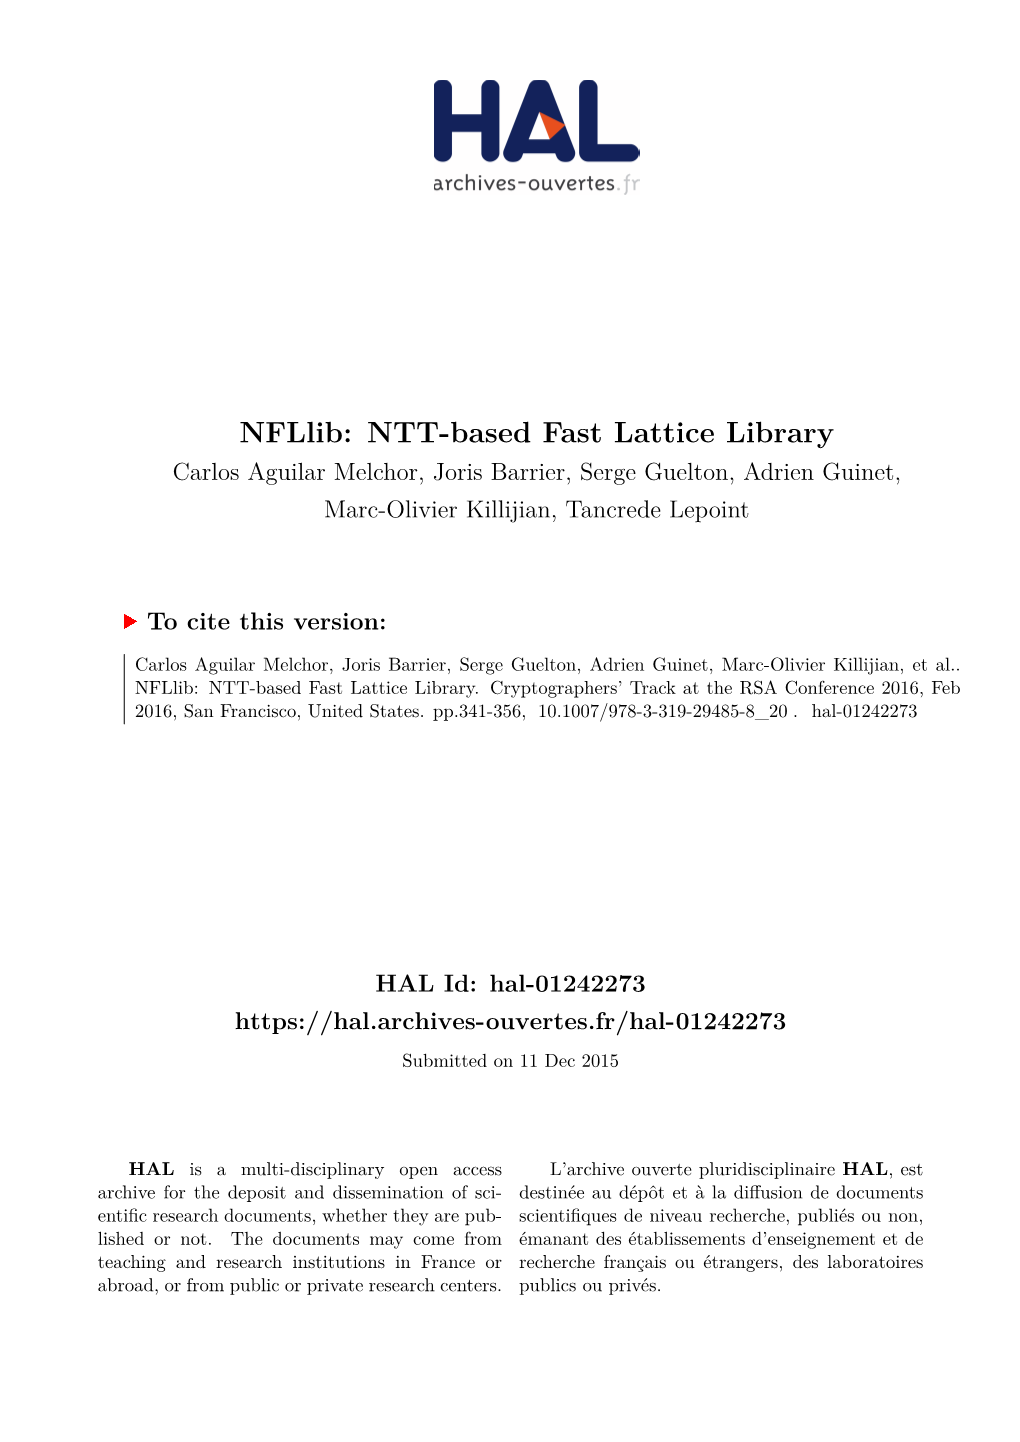 Nfllib: NTT-Based Fast Lattice Library Carlos Aguilar Melchor, Joris Barrier, Serge Guelton, Adrien Guinet, Marc-Olivier Killijian, Tancrede Lepoint